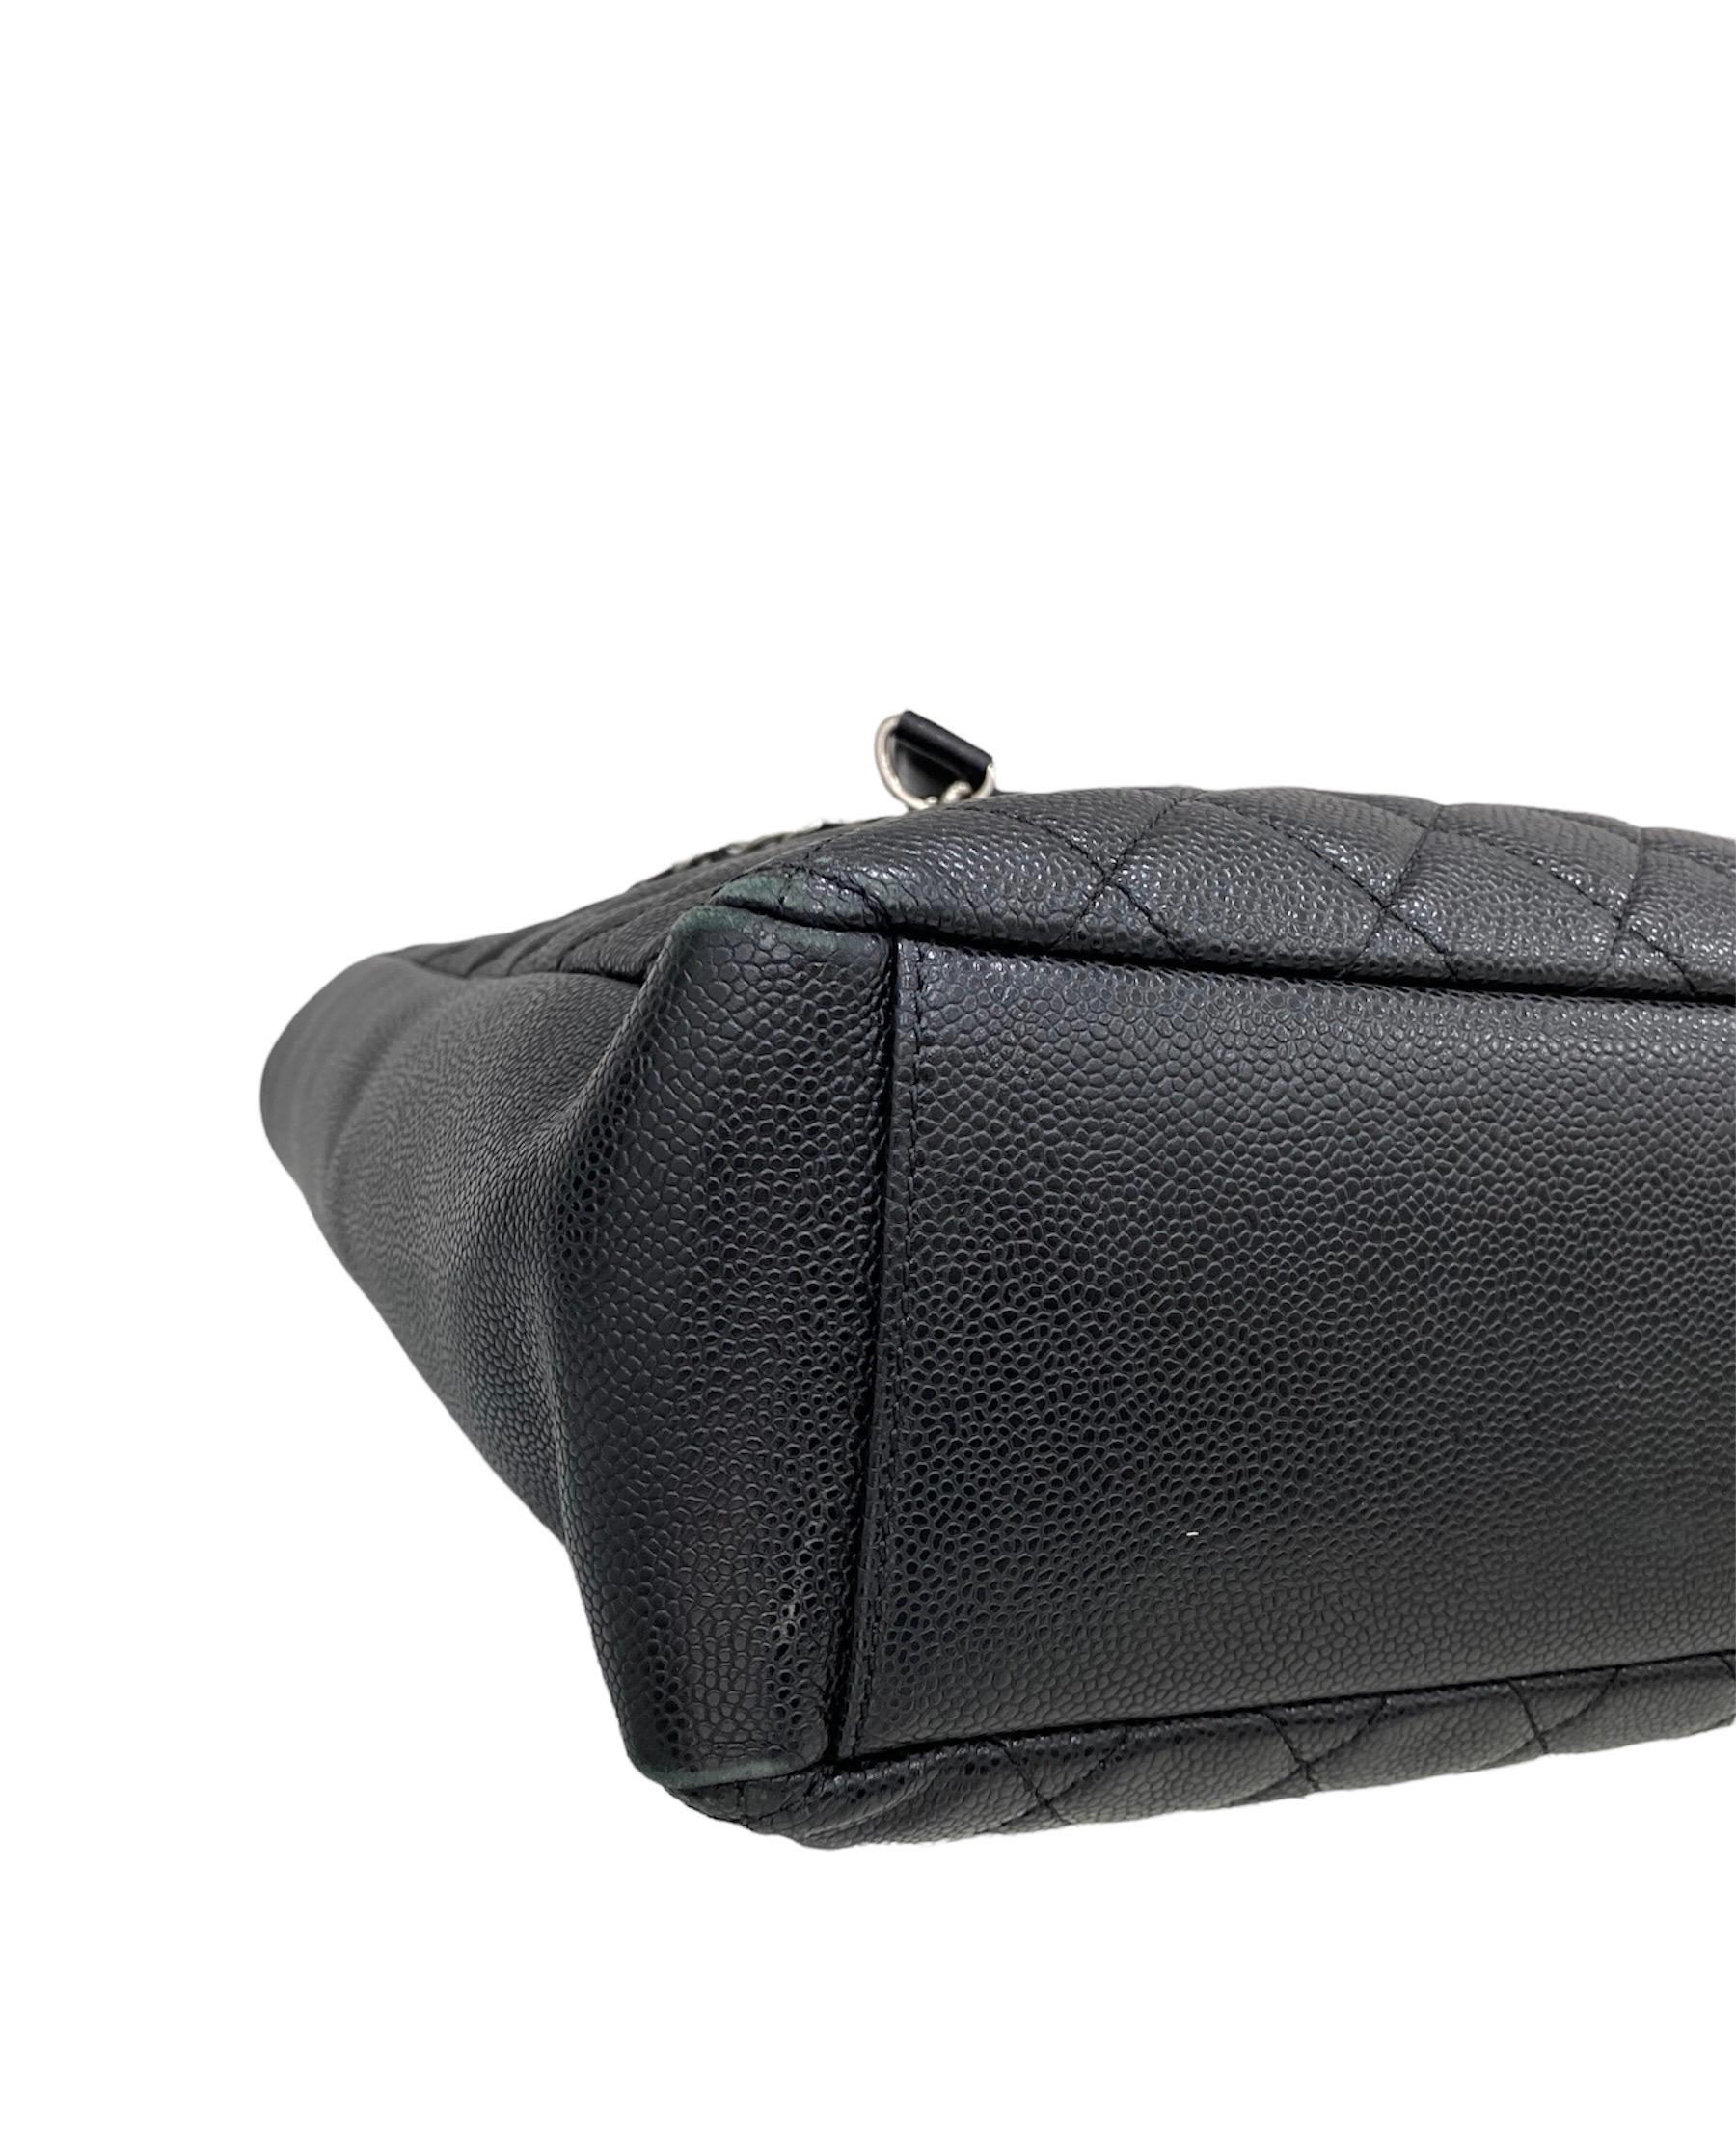 Women's 2013 Chanel PST Black Caviar Leather Shoulder Bag 